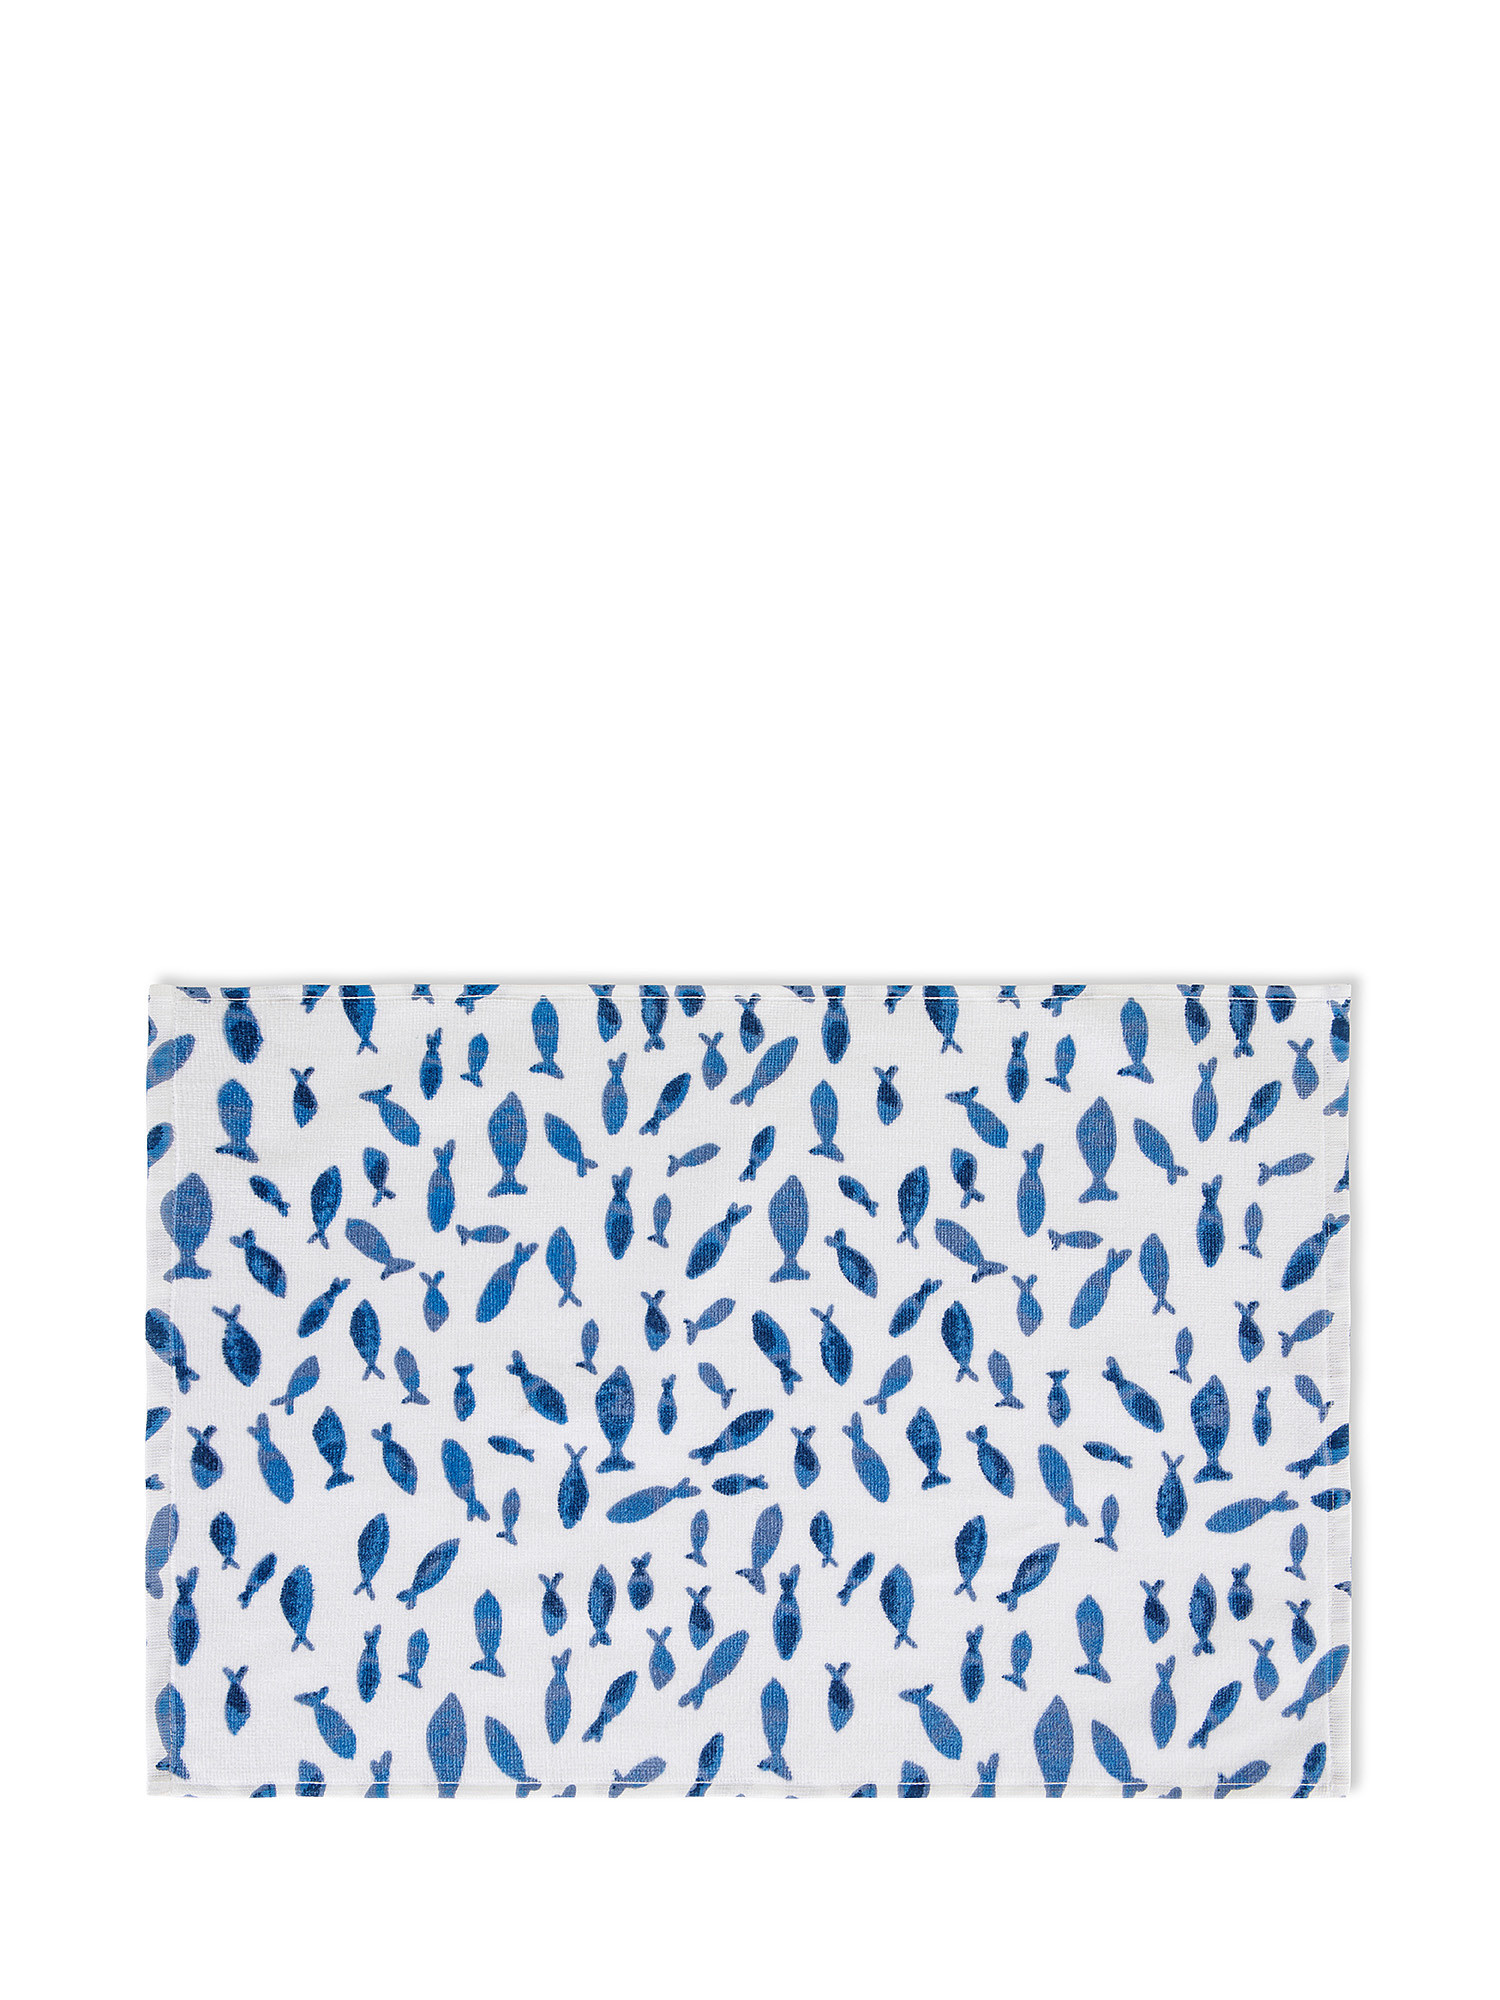 Asciugamano spugna di cotone motivo pesci, Bianco, large image number 1